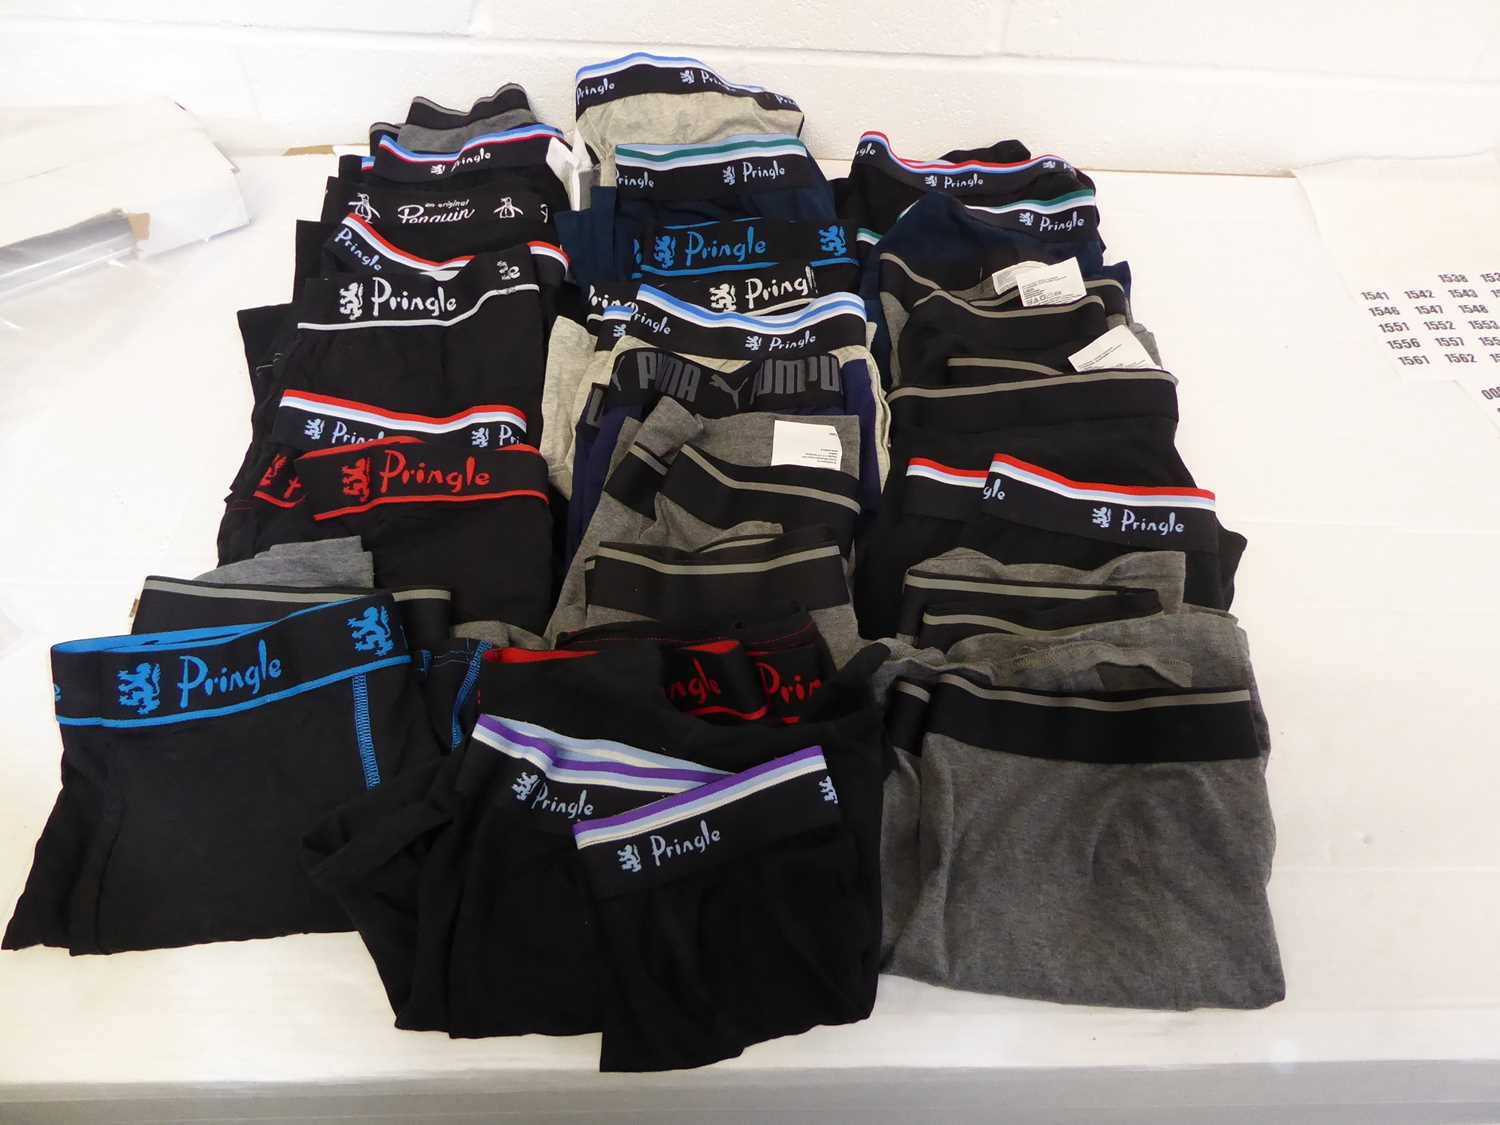 +VAT Mens boxer shorts in black, navy and grey (30 pairs)